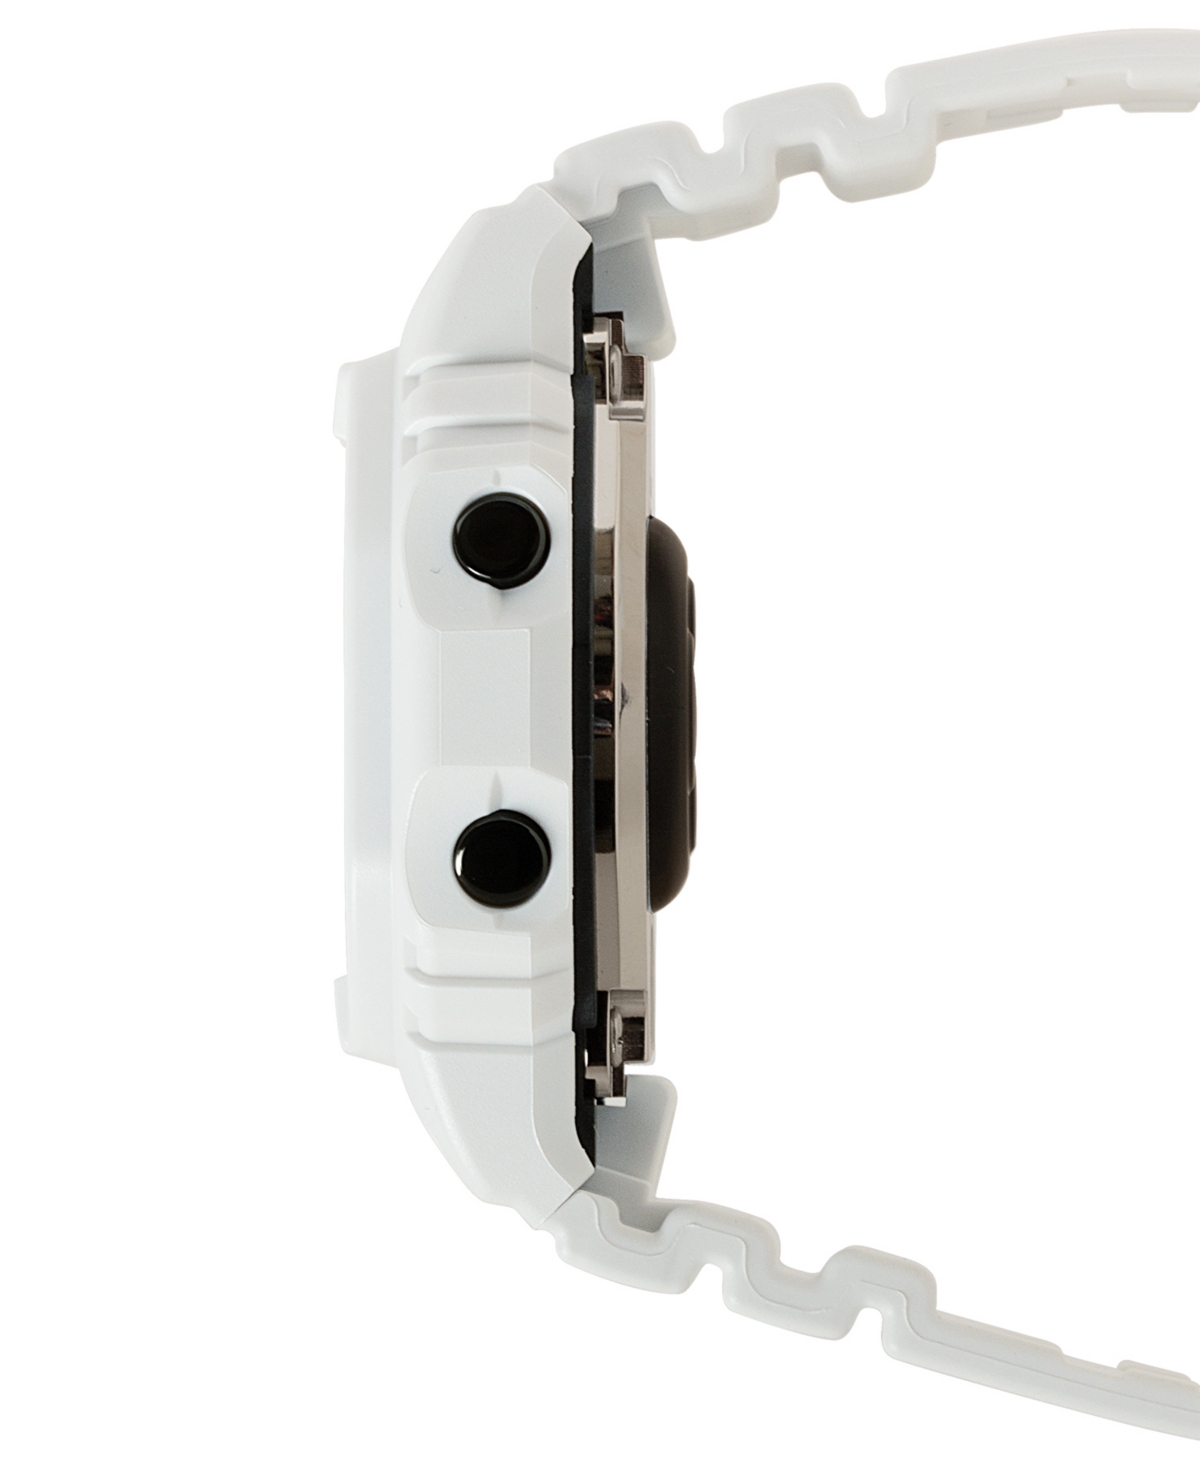 Shop G-shock Men's Digital White Resin Strap Watch 45mm, Dwh5600-7